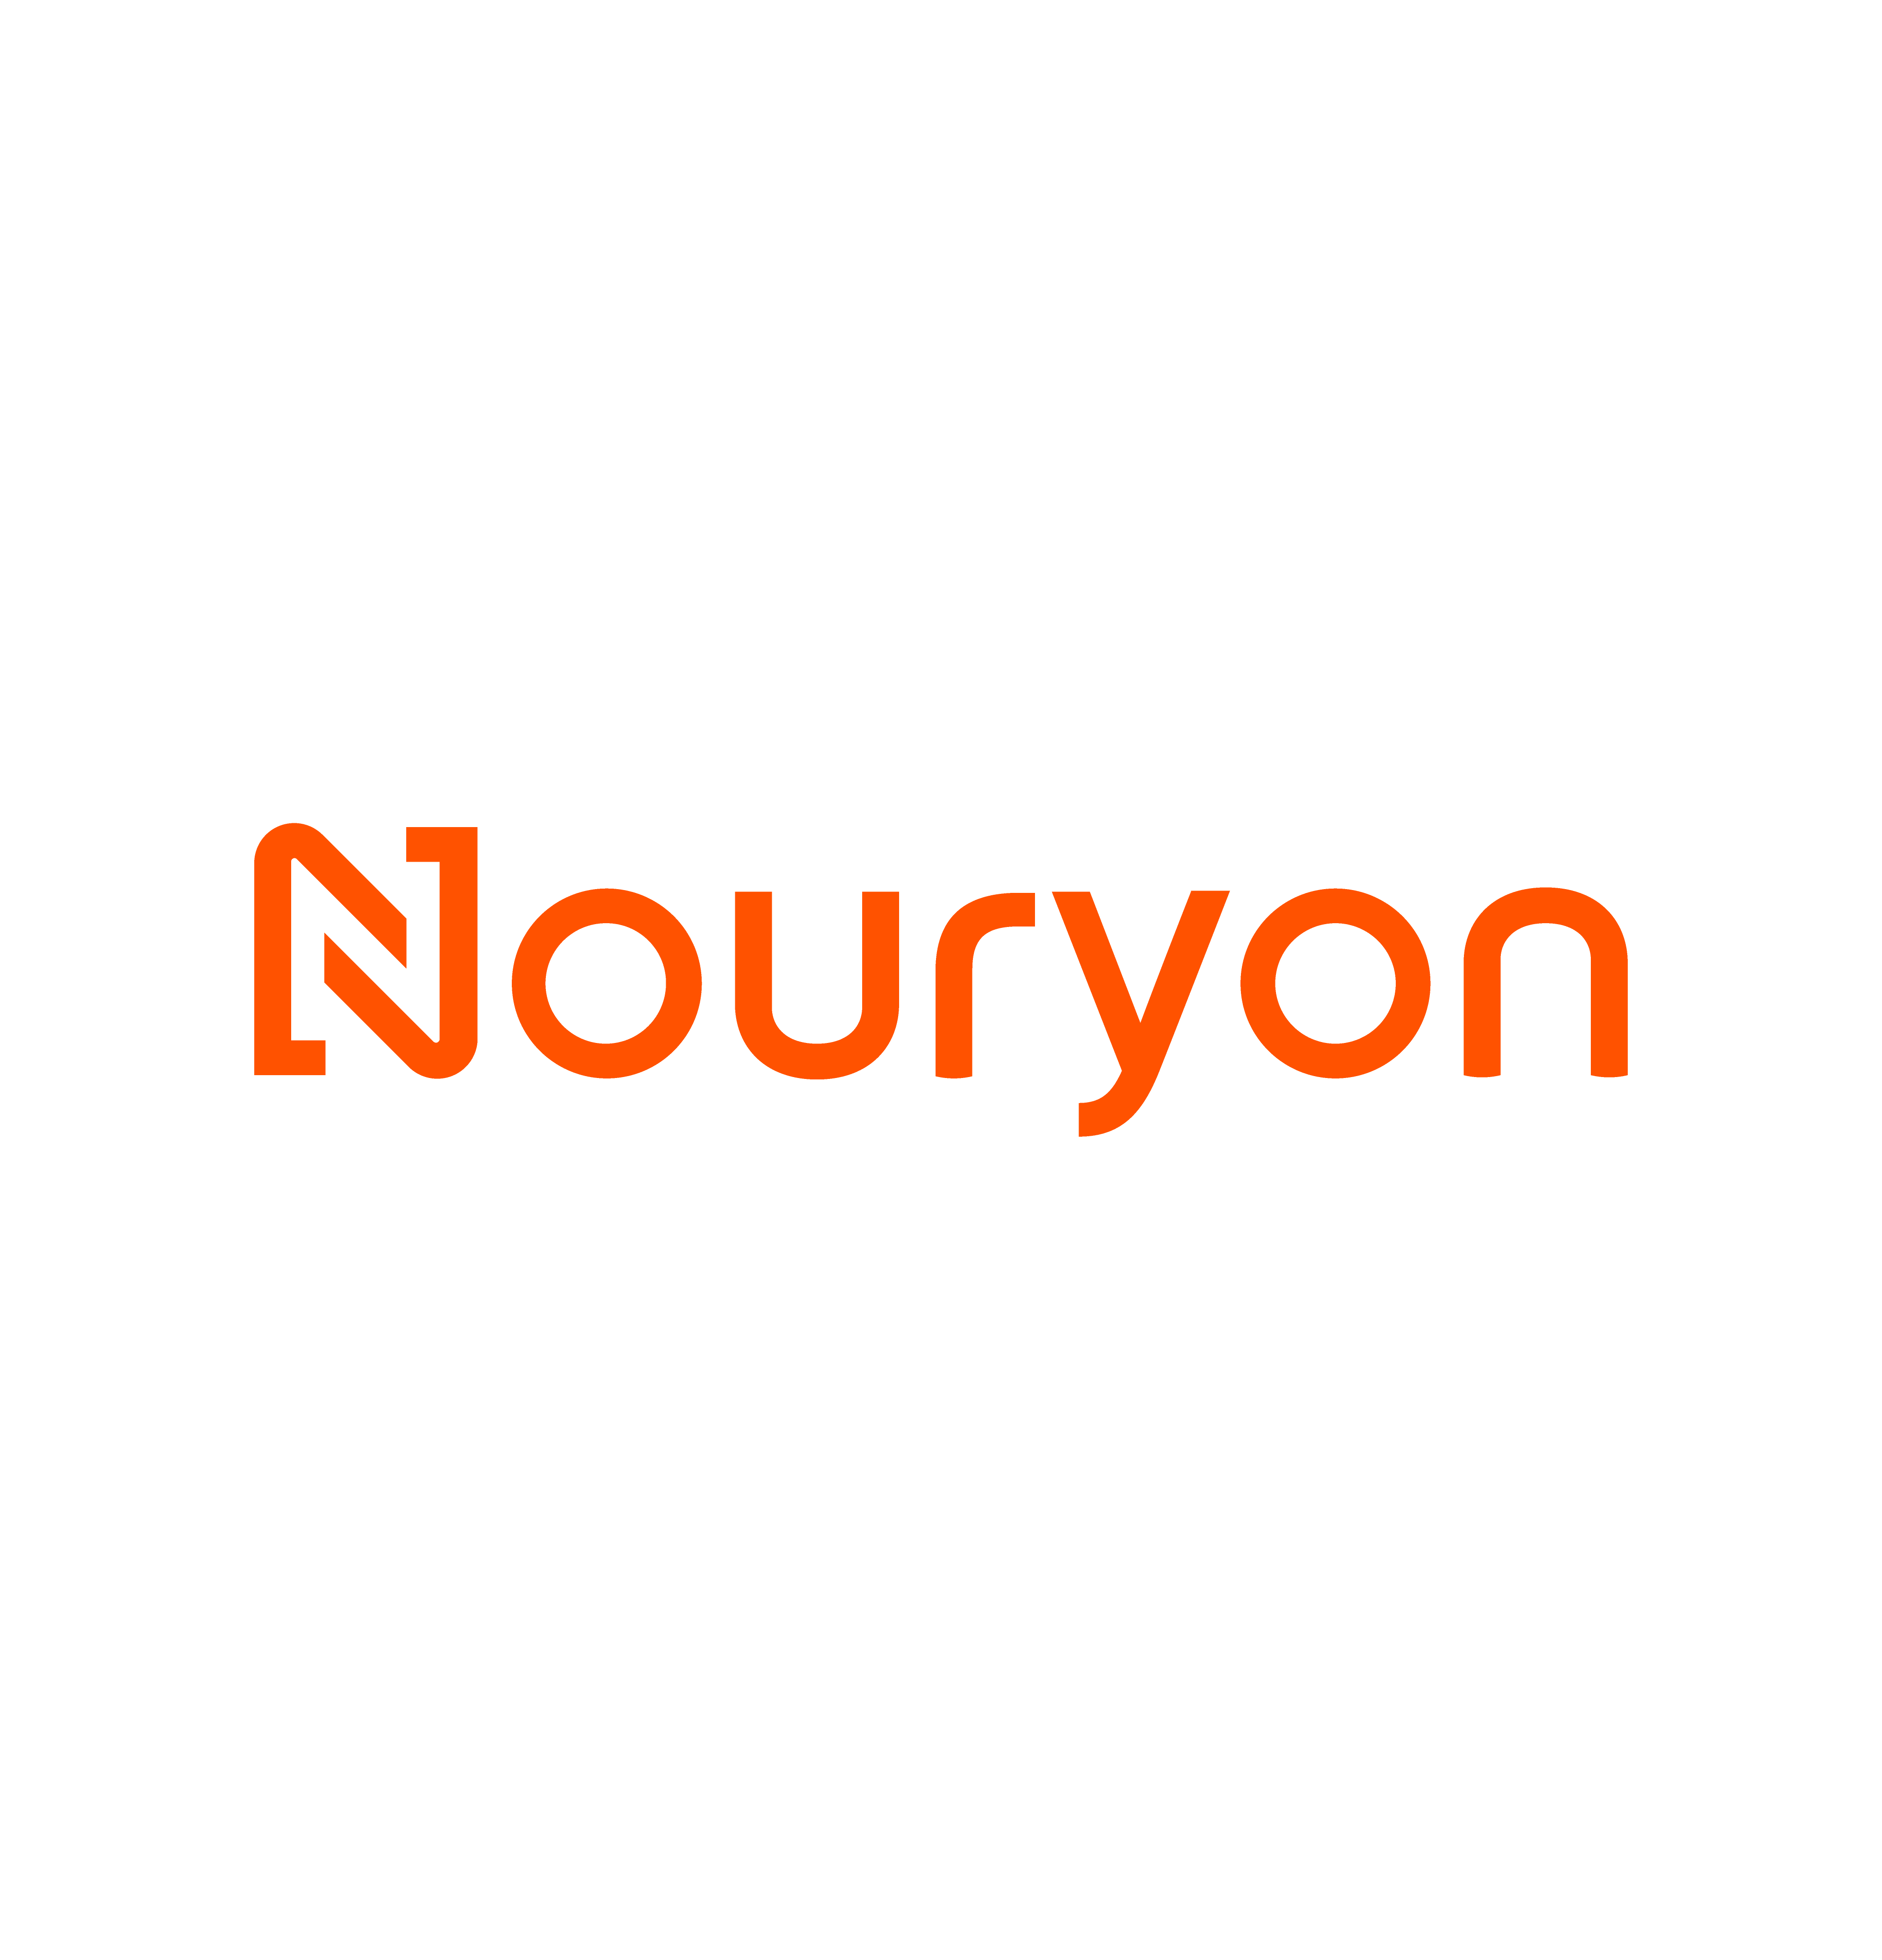 NOURYON